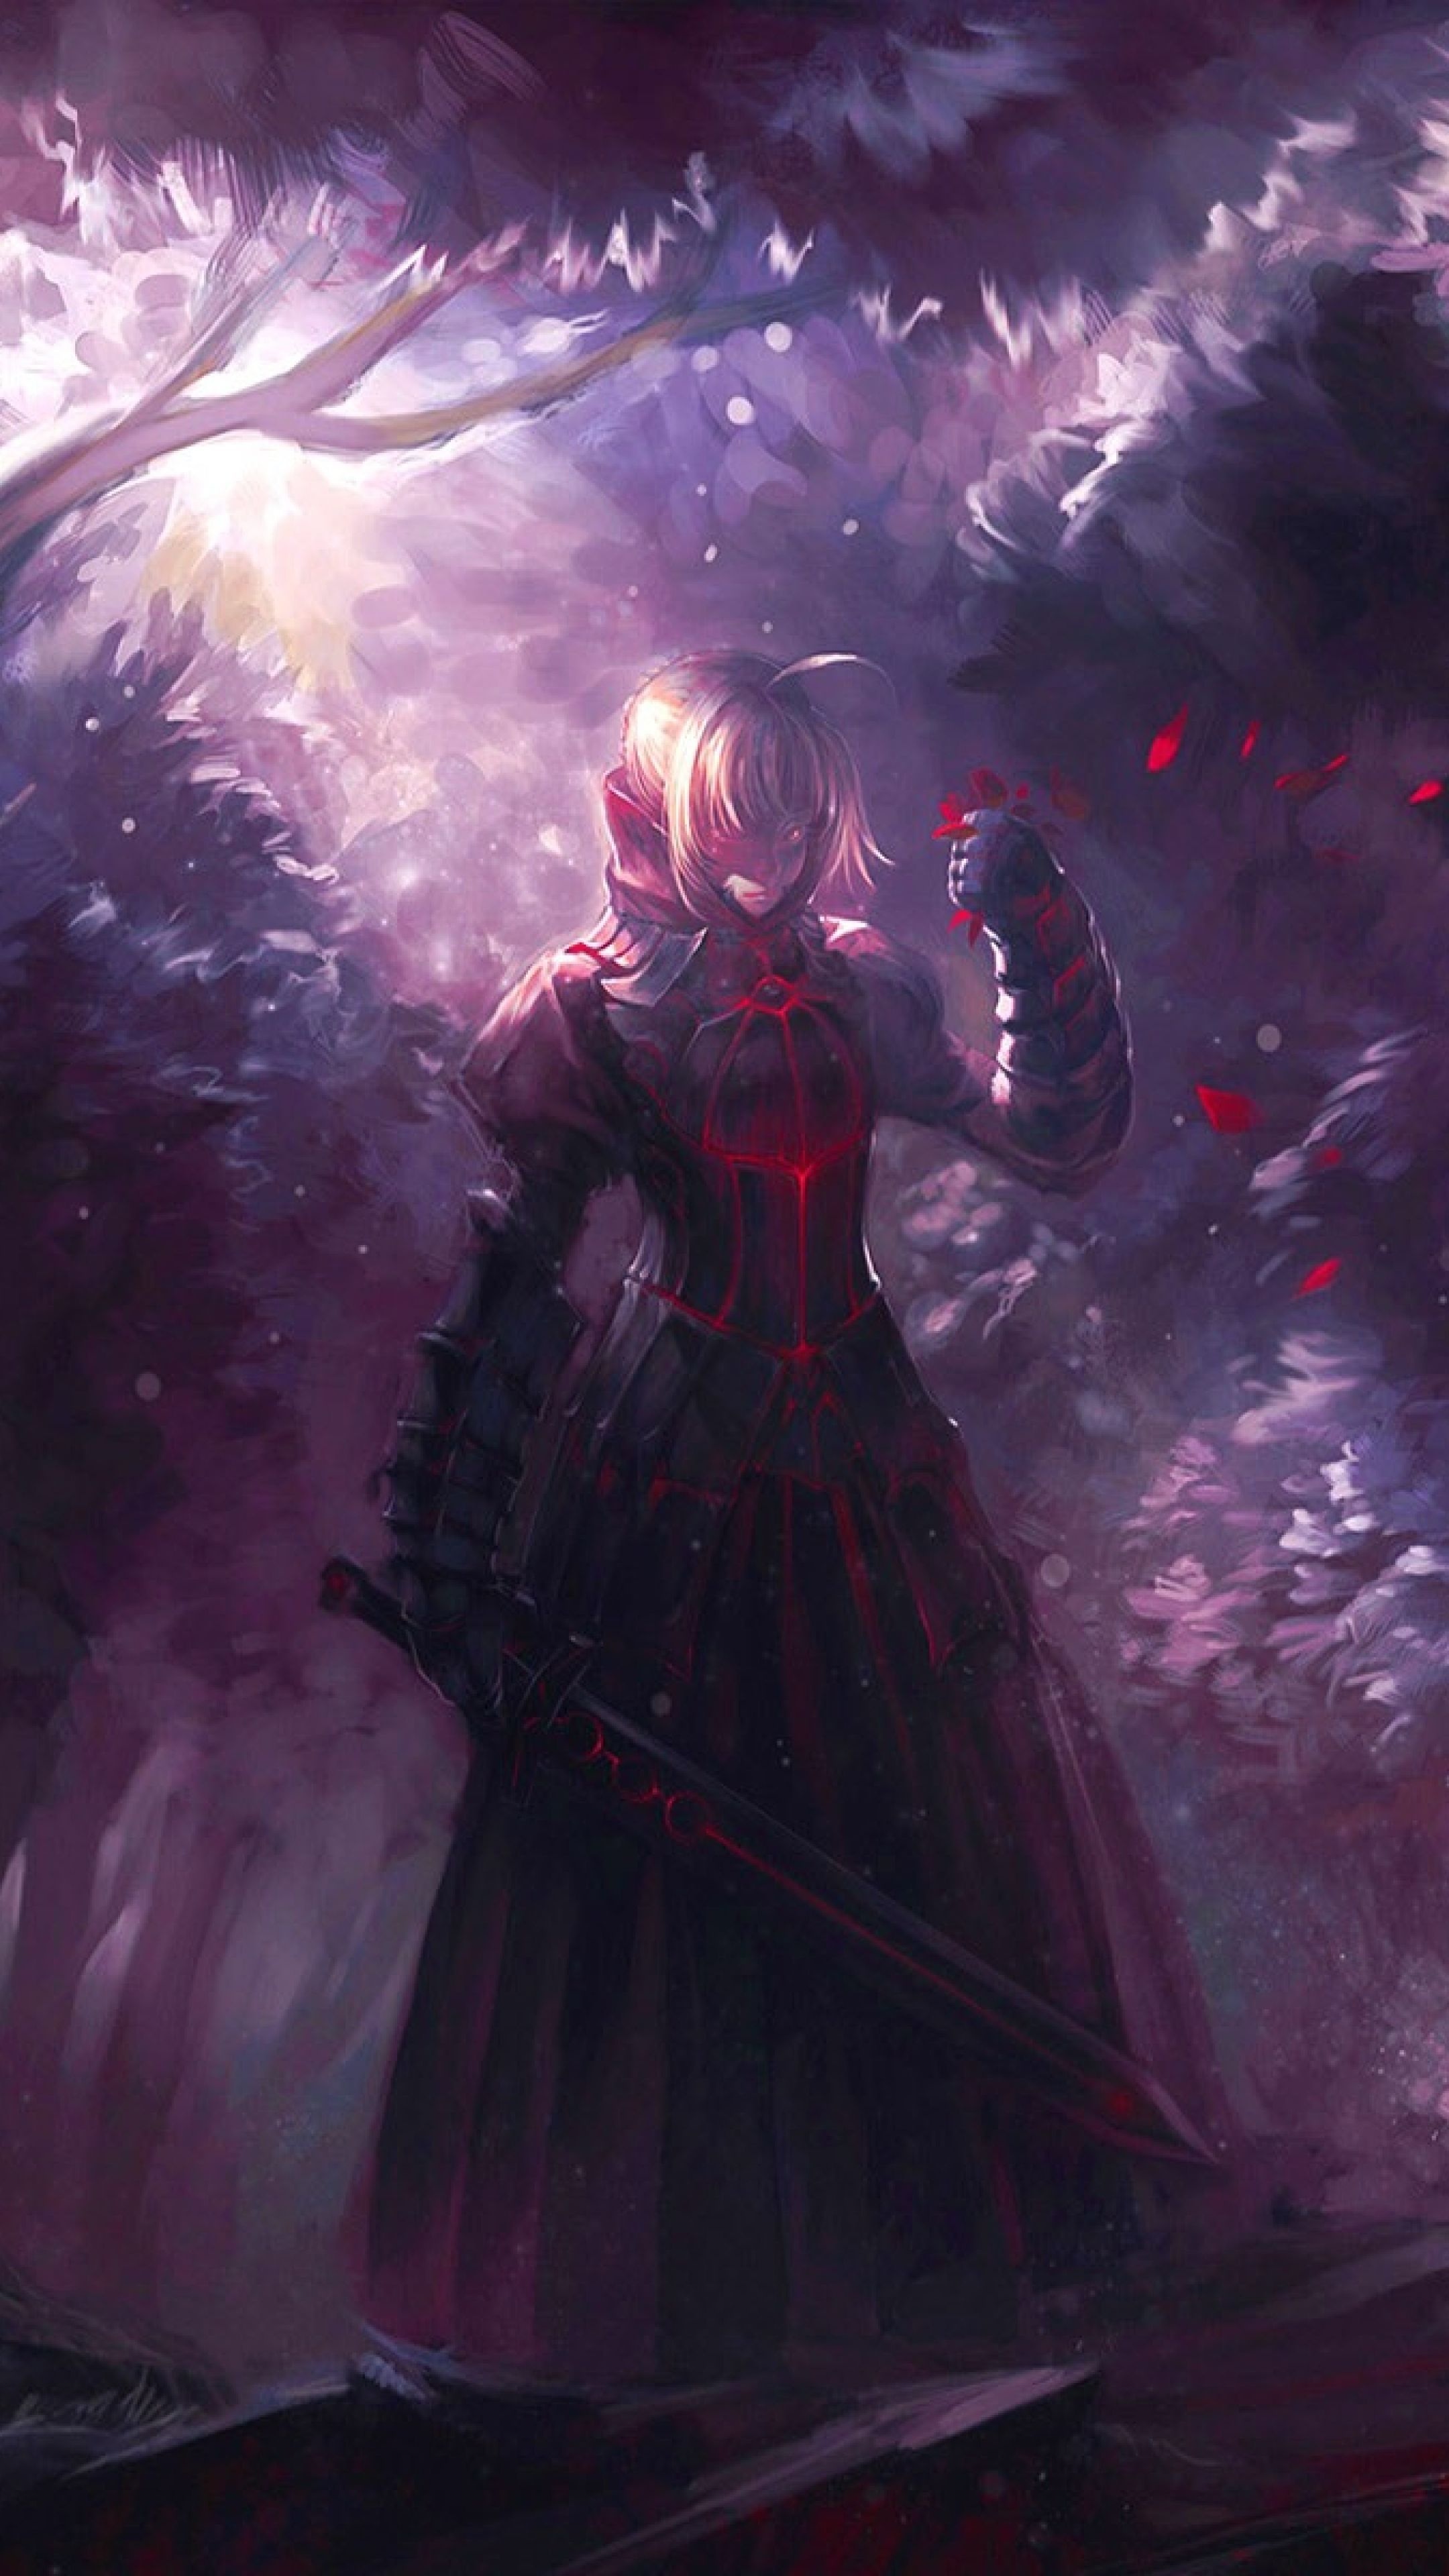 Gothic Anime: Dark knight, Saber Alter, The corrupted version of Artoria Pendragon in the Fate series. 2160x3840 4K Wallpaper.